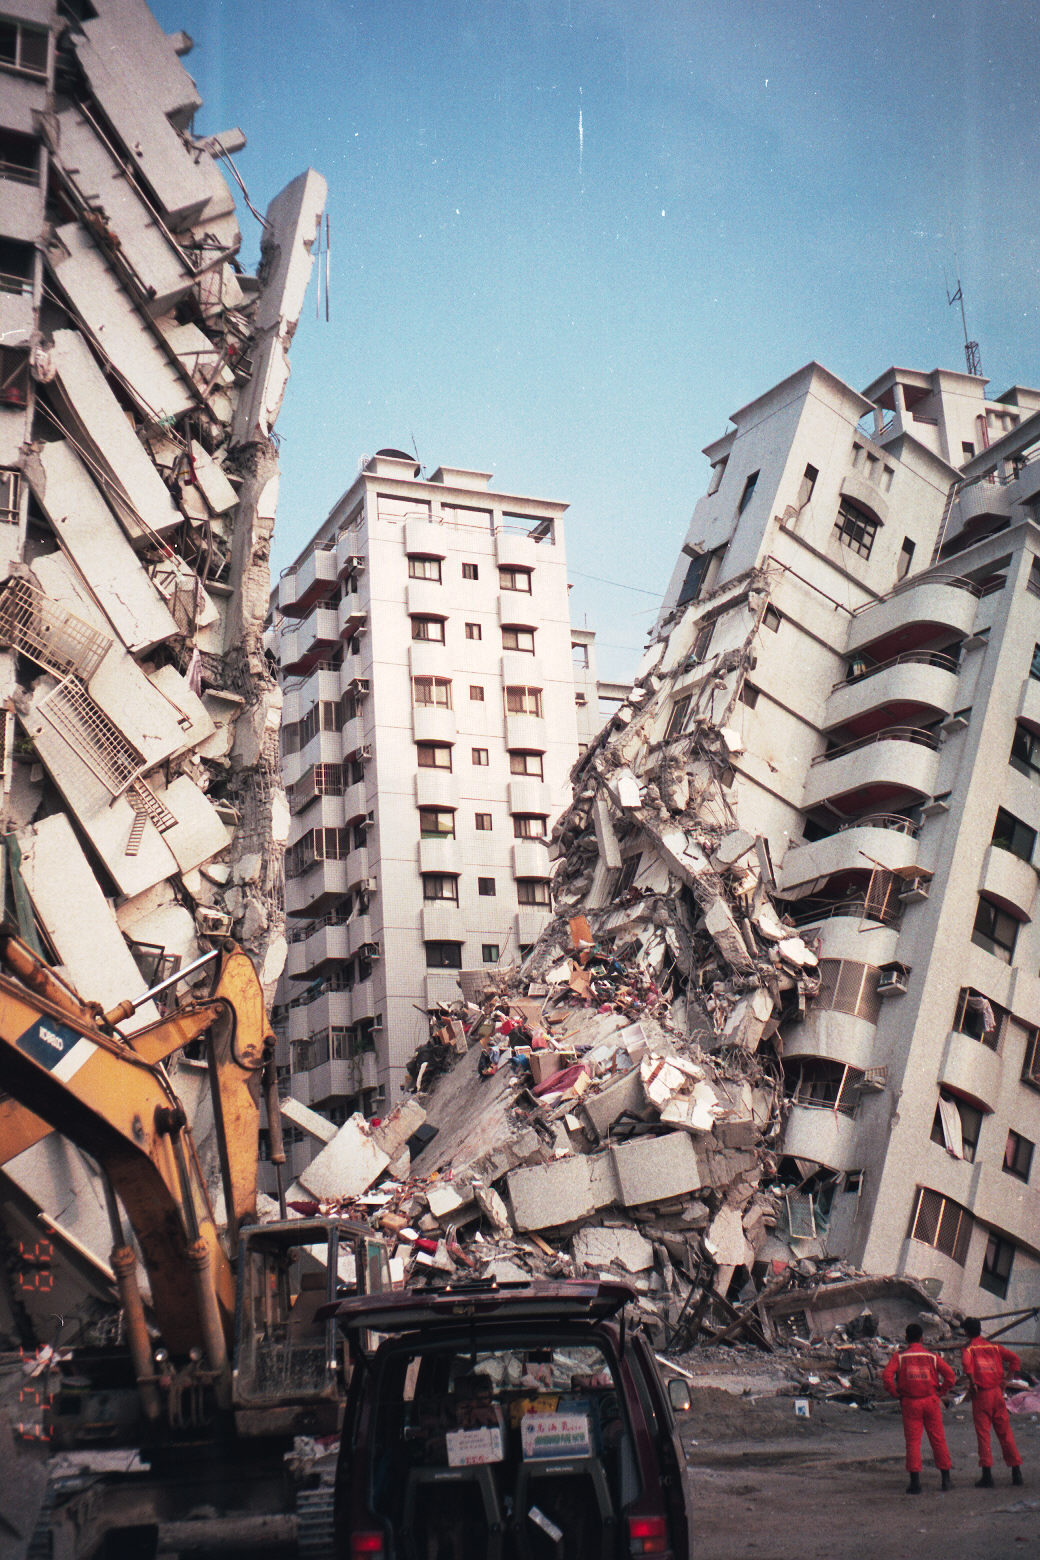 Devastation from the 1999 Chi-Chi earthquake in Taiwan (Source: Kwangmo/Wikimedia)